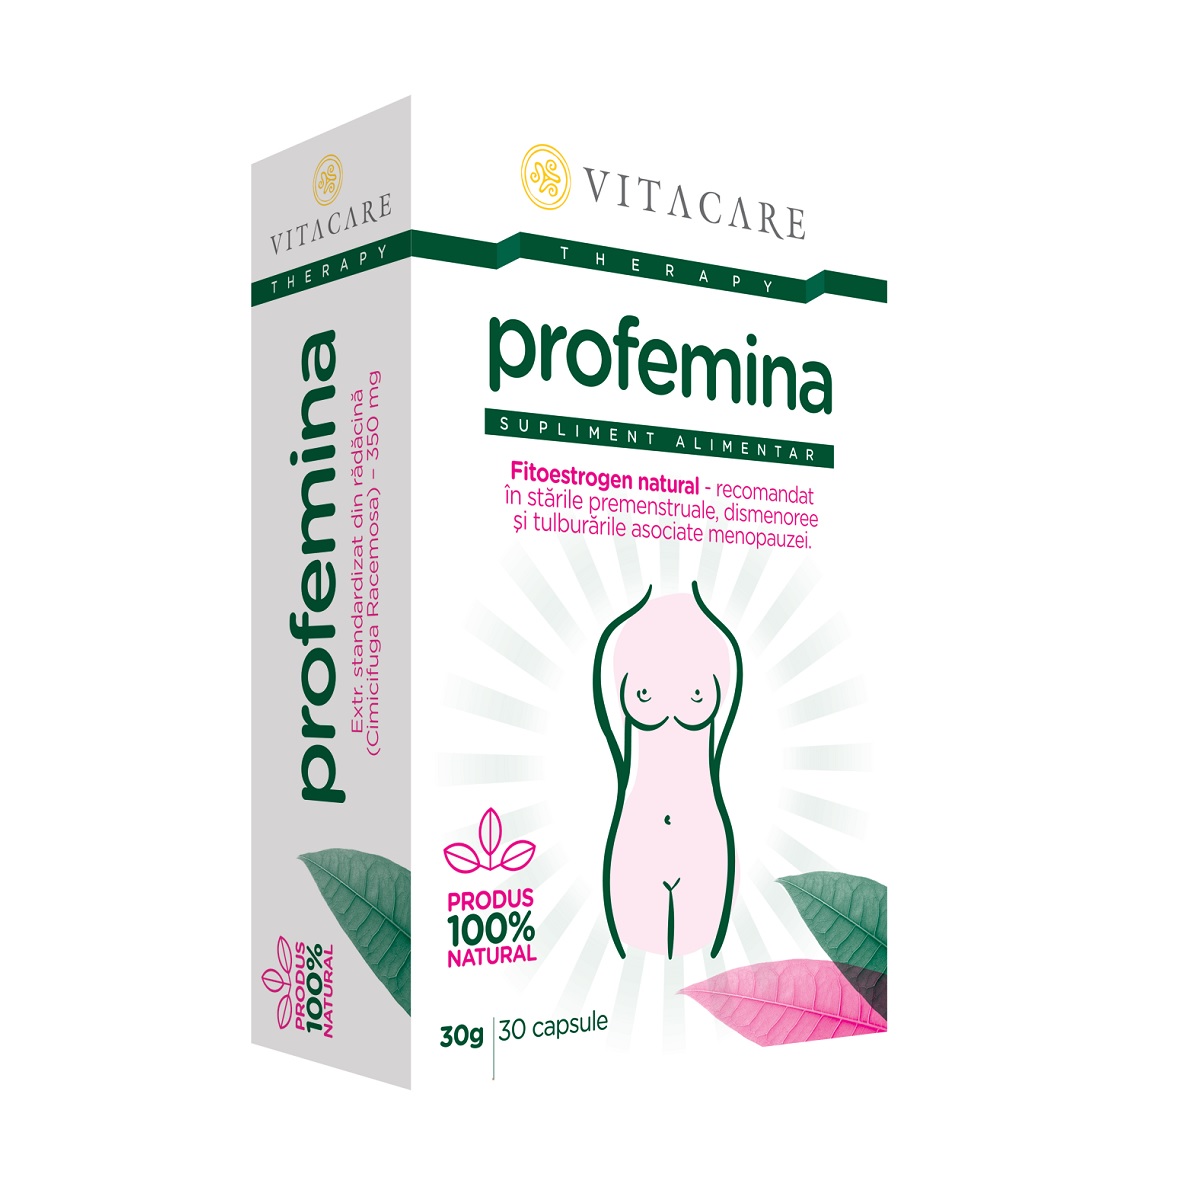 Menopauza si premenopauza - Profemina, 30 capsule, Vitacare, sinapis.ro